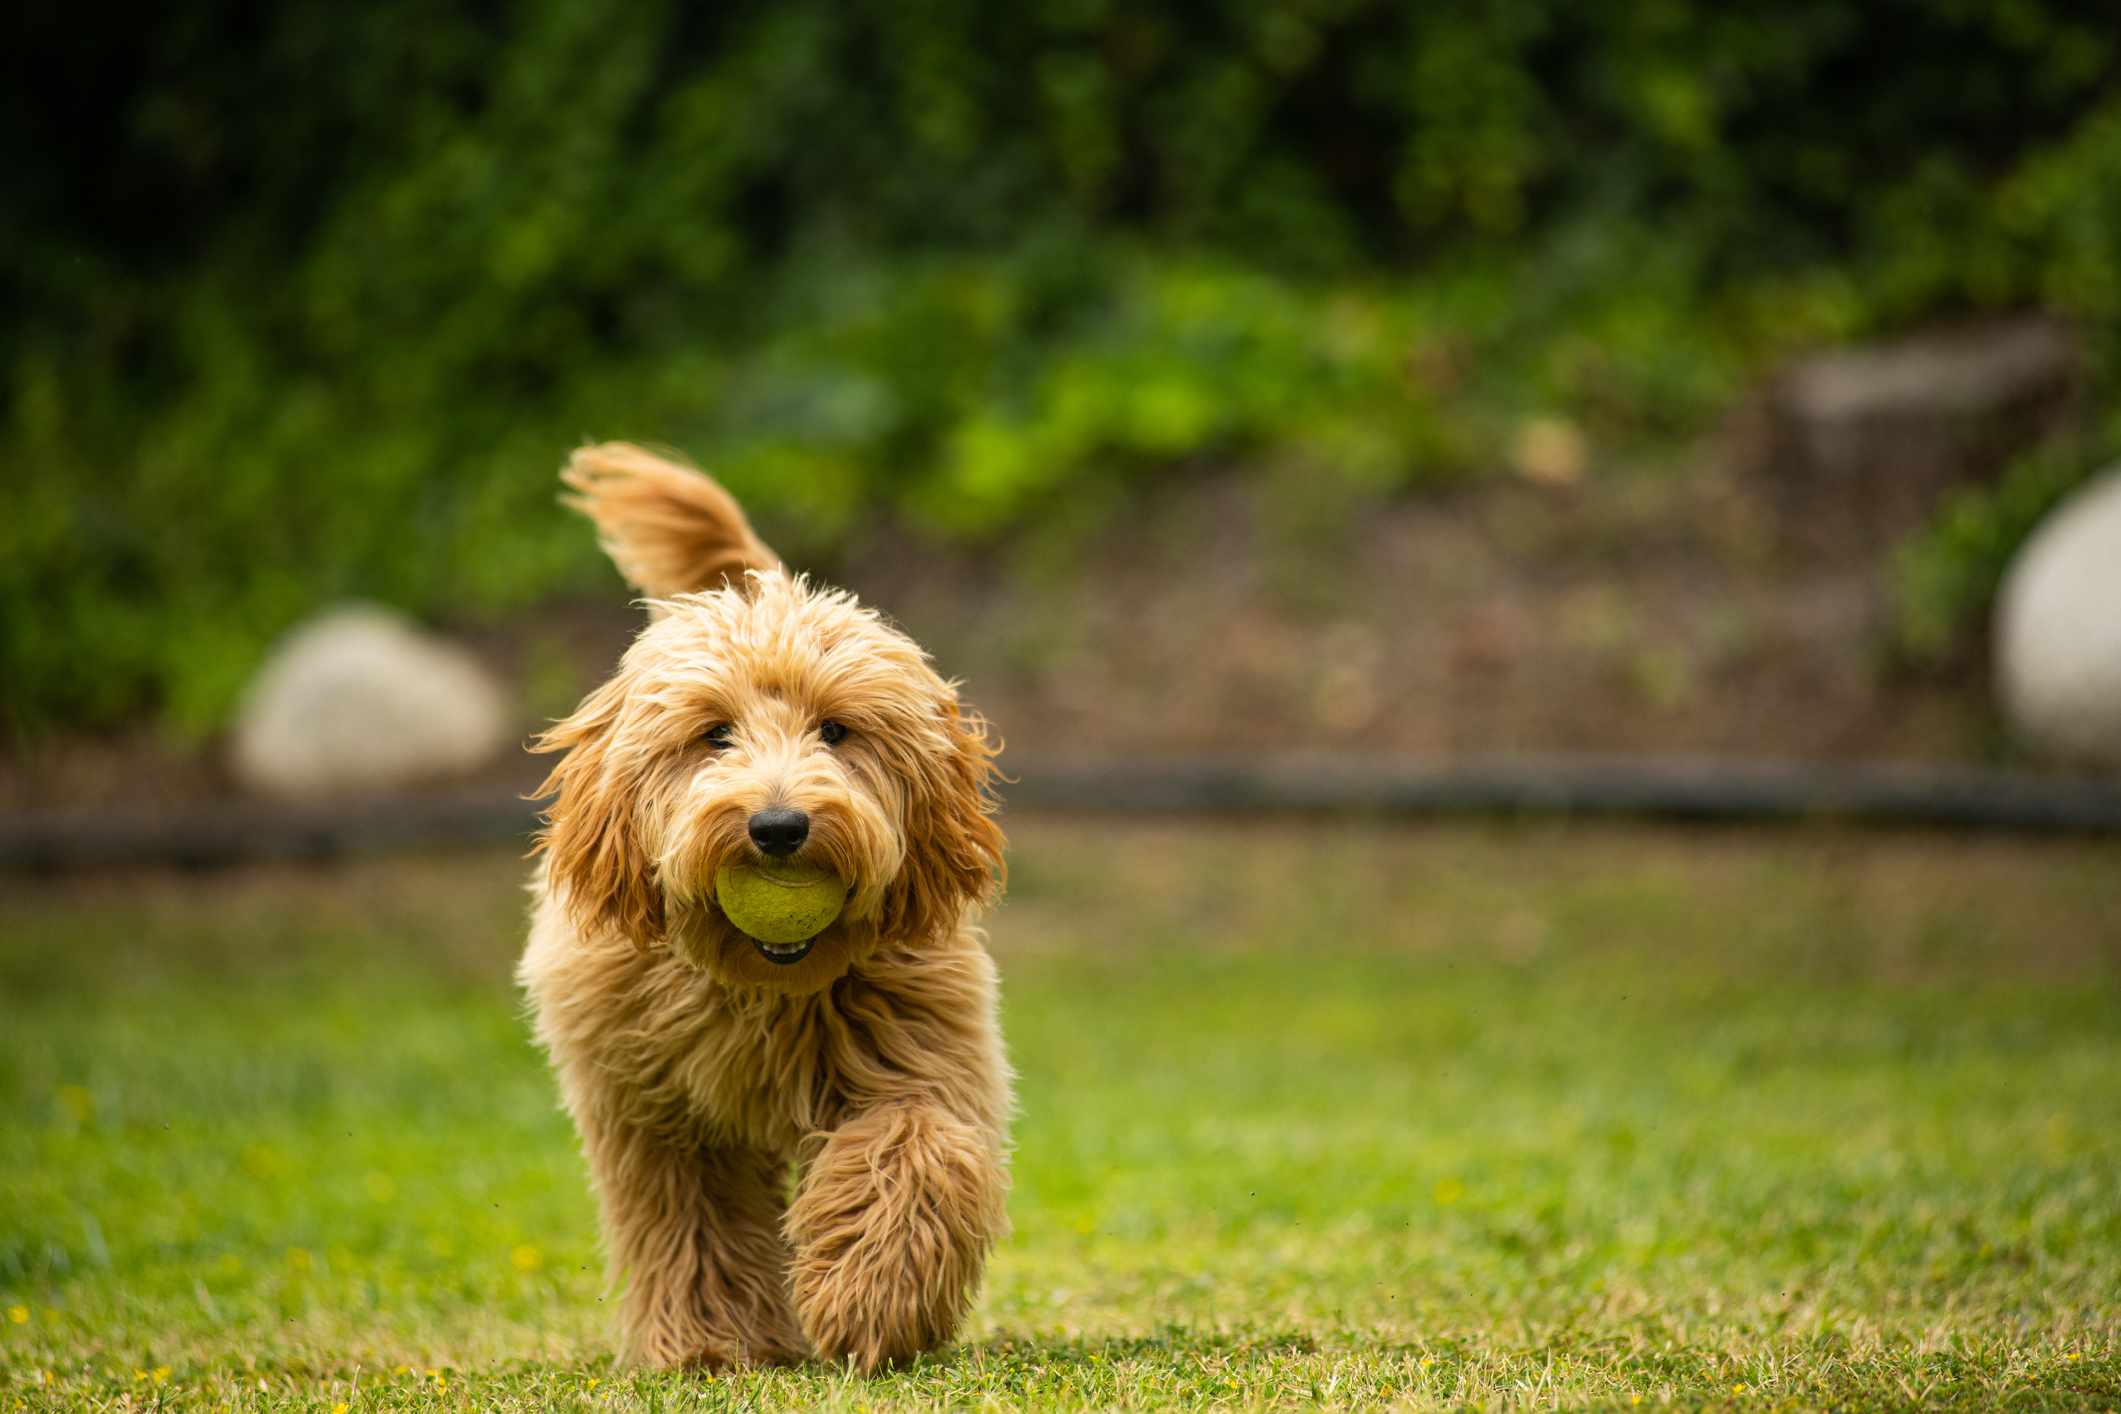 cachorro de golden doodle en miniatura con una pelota de tenis en la boca